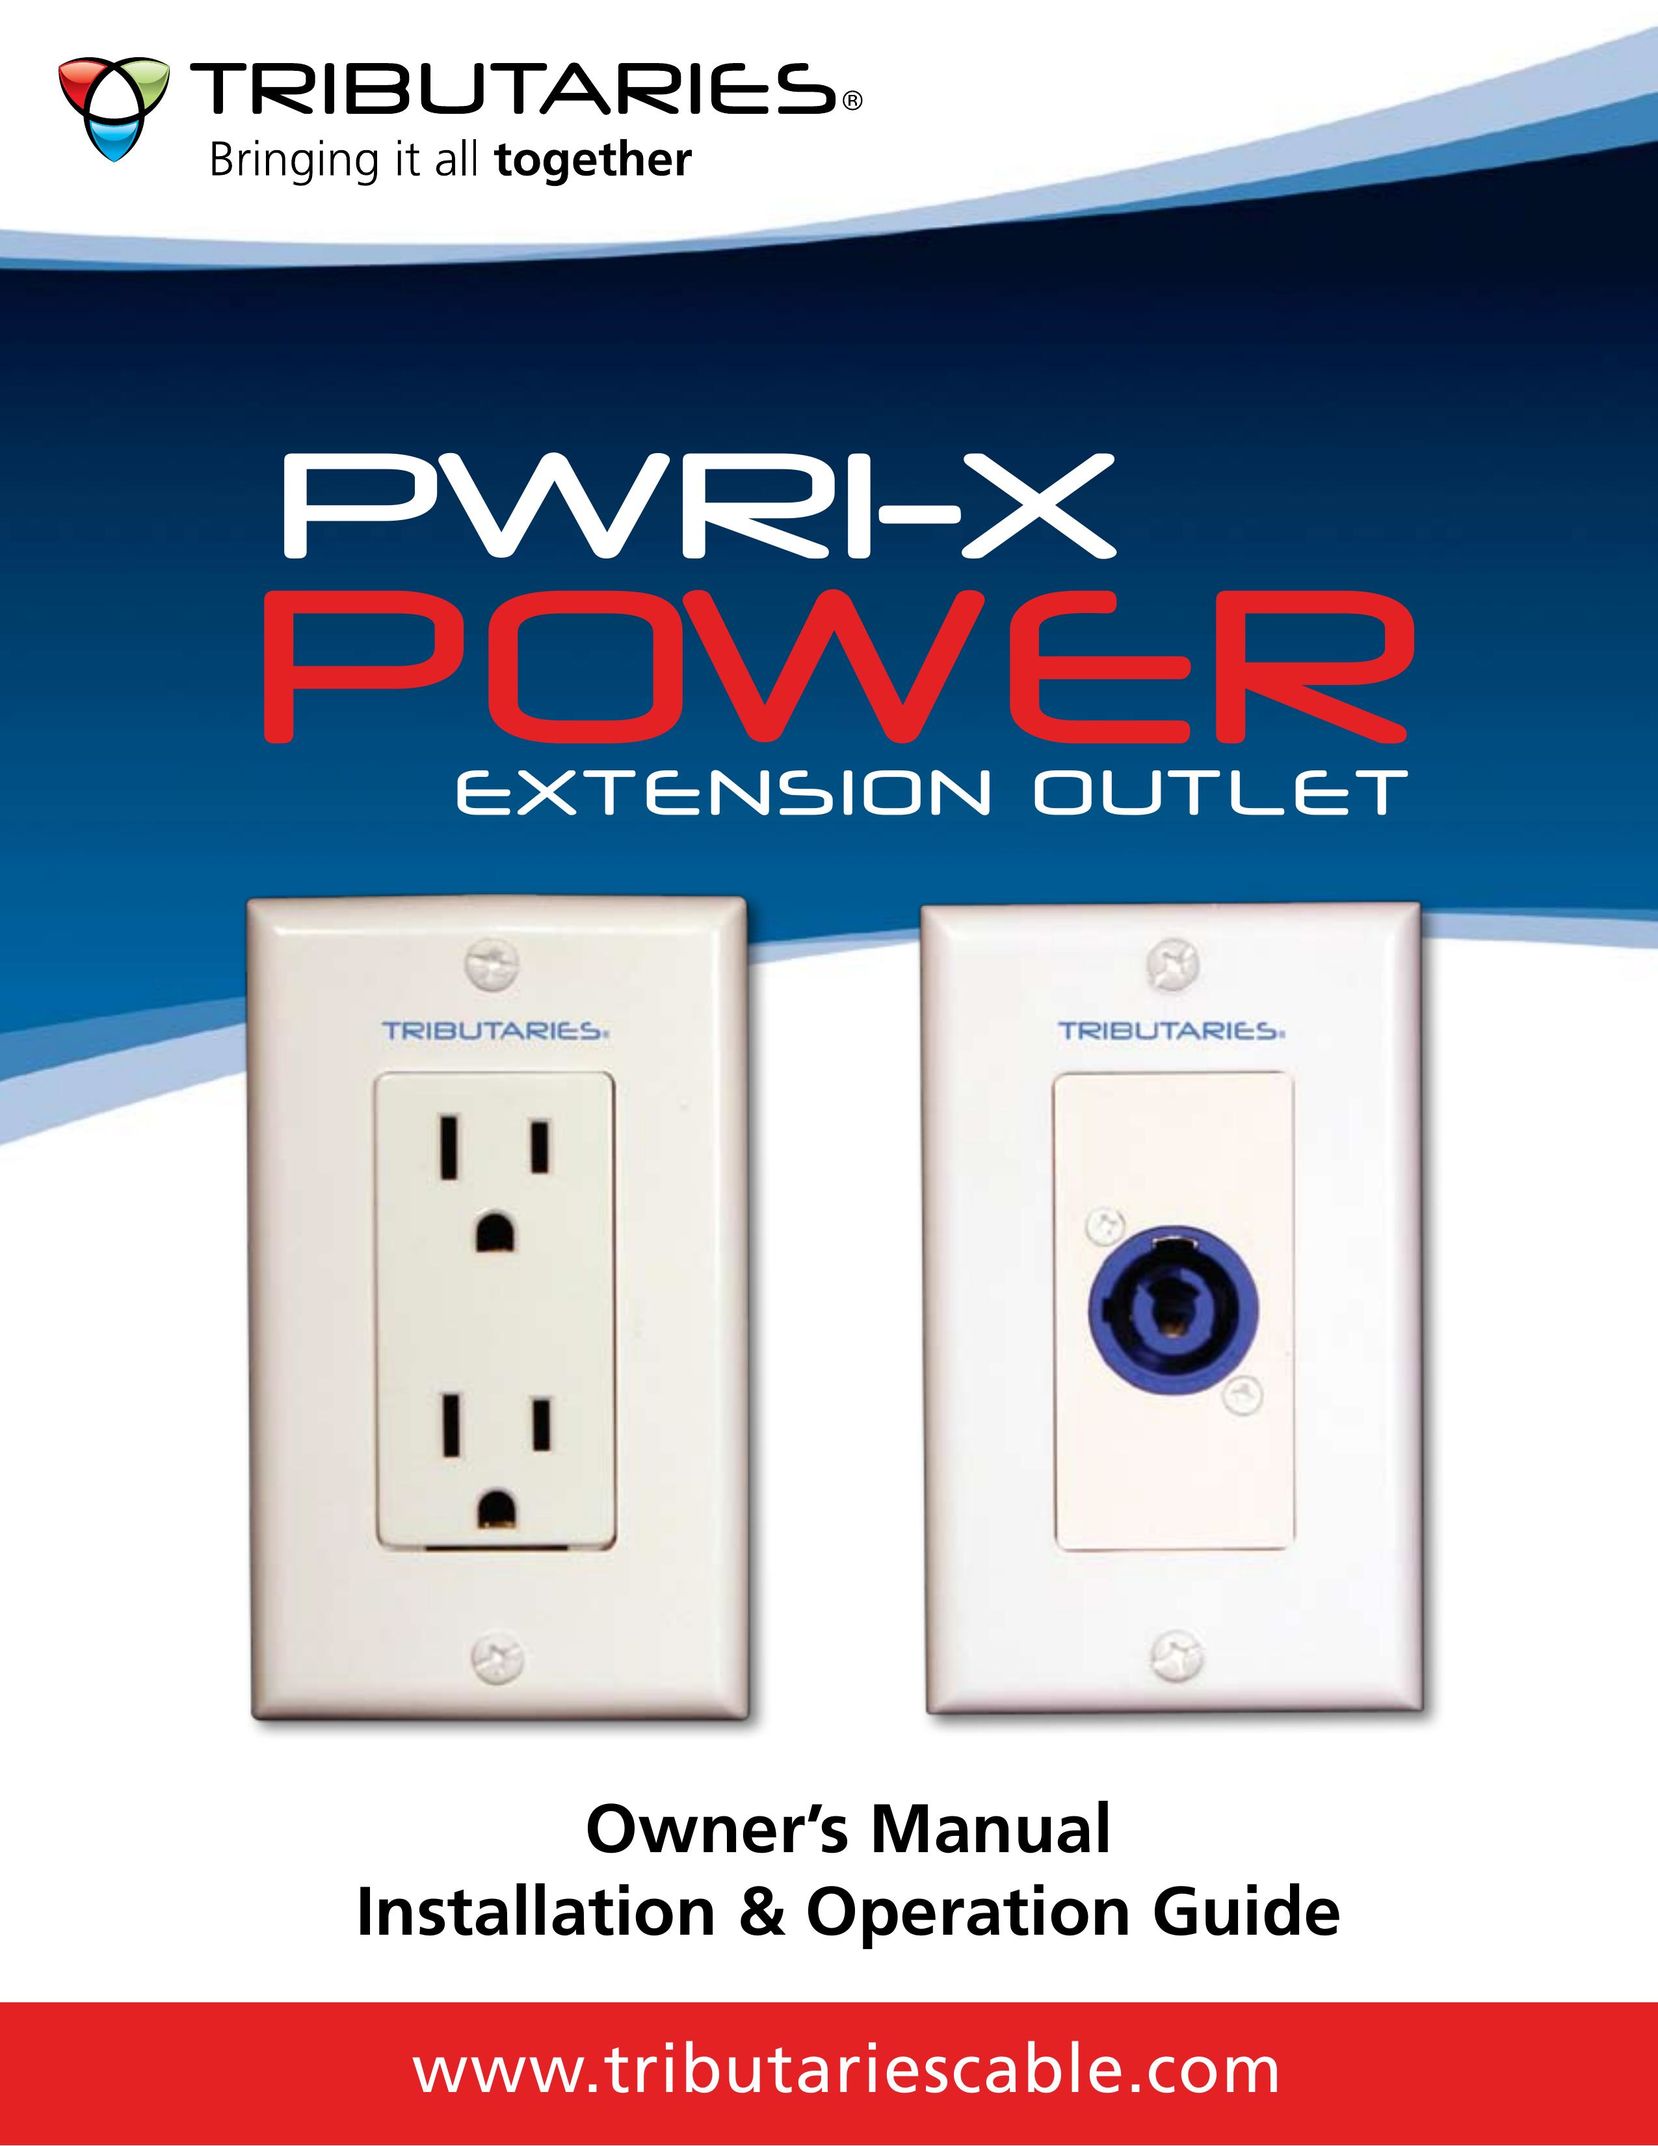 Tributaries PWRI-X Surge Protector User Manual